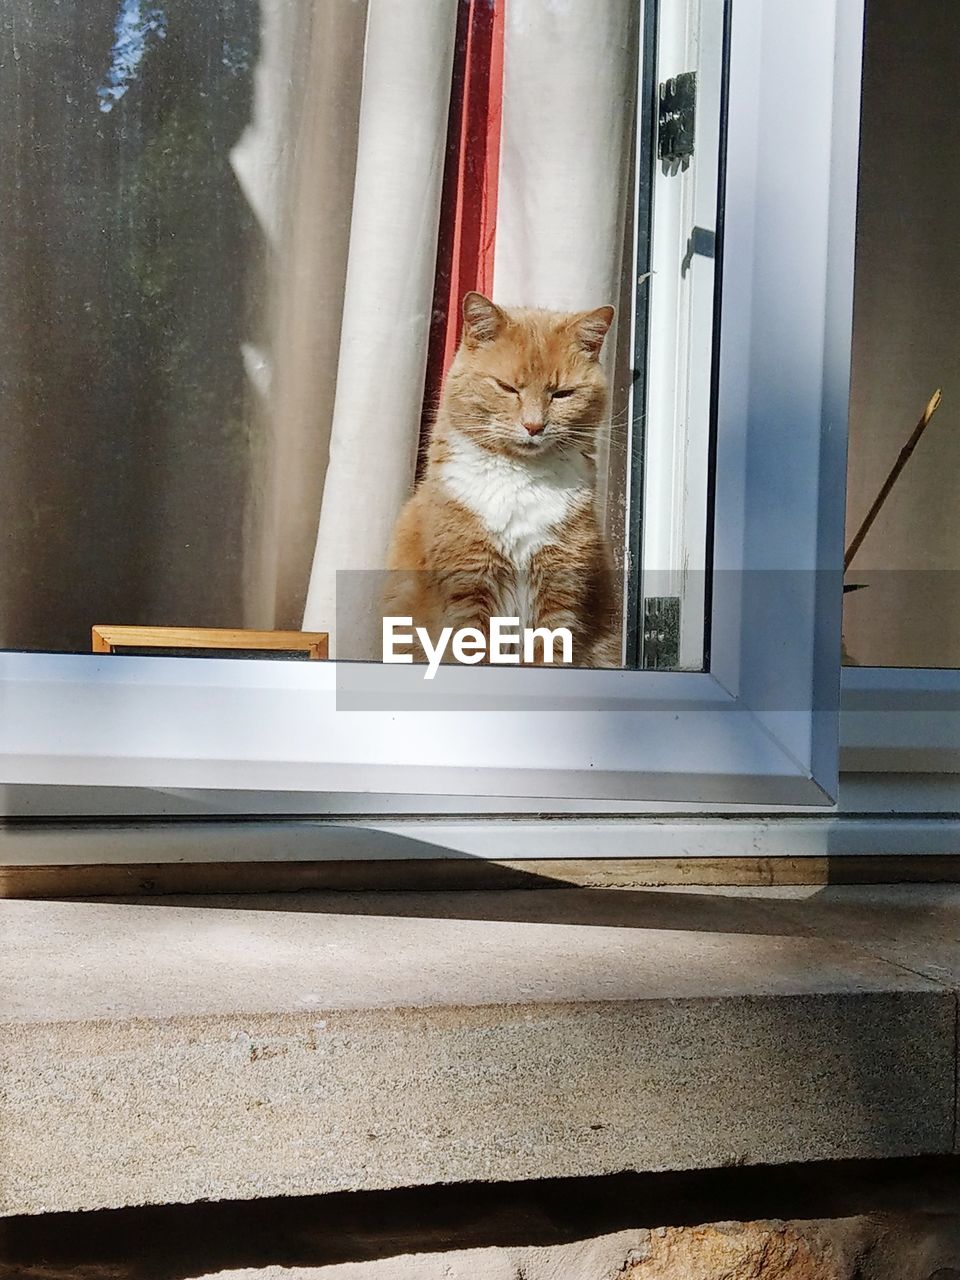 Cat sitting on window sill seen through glass